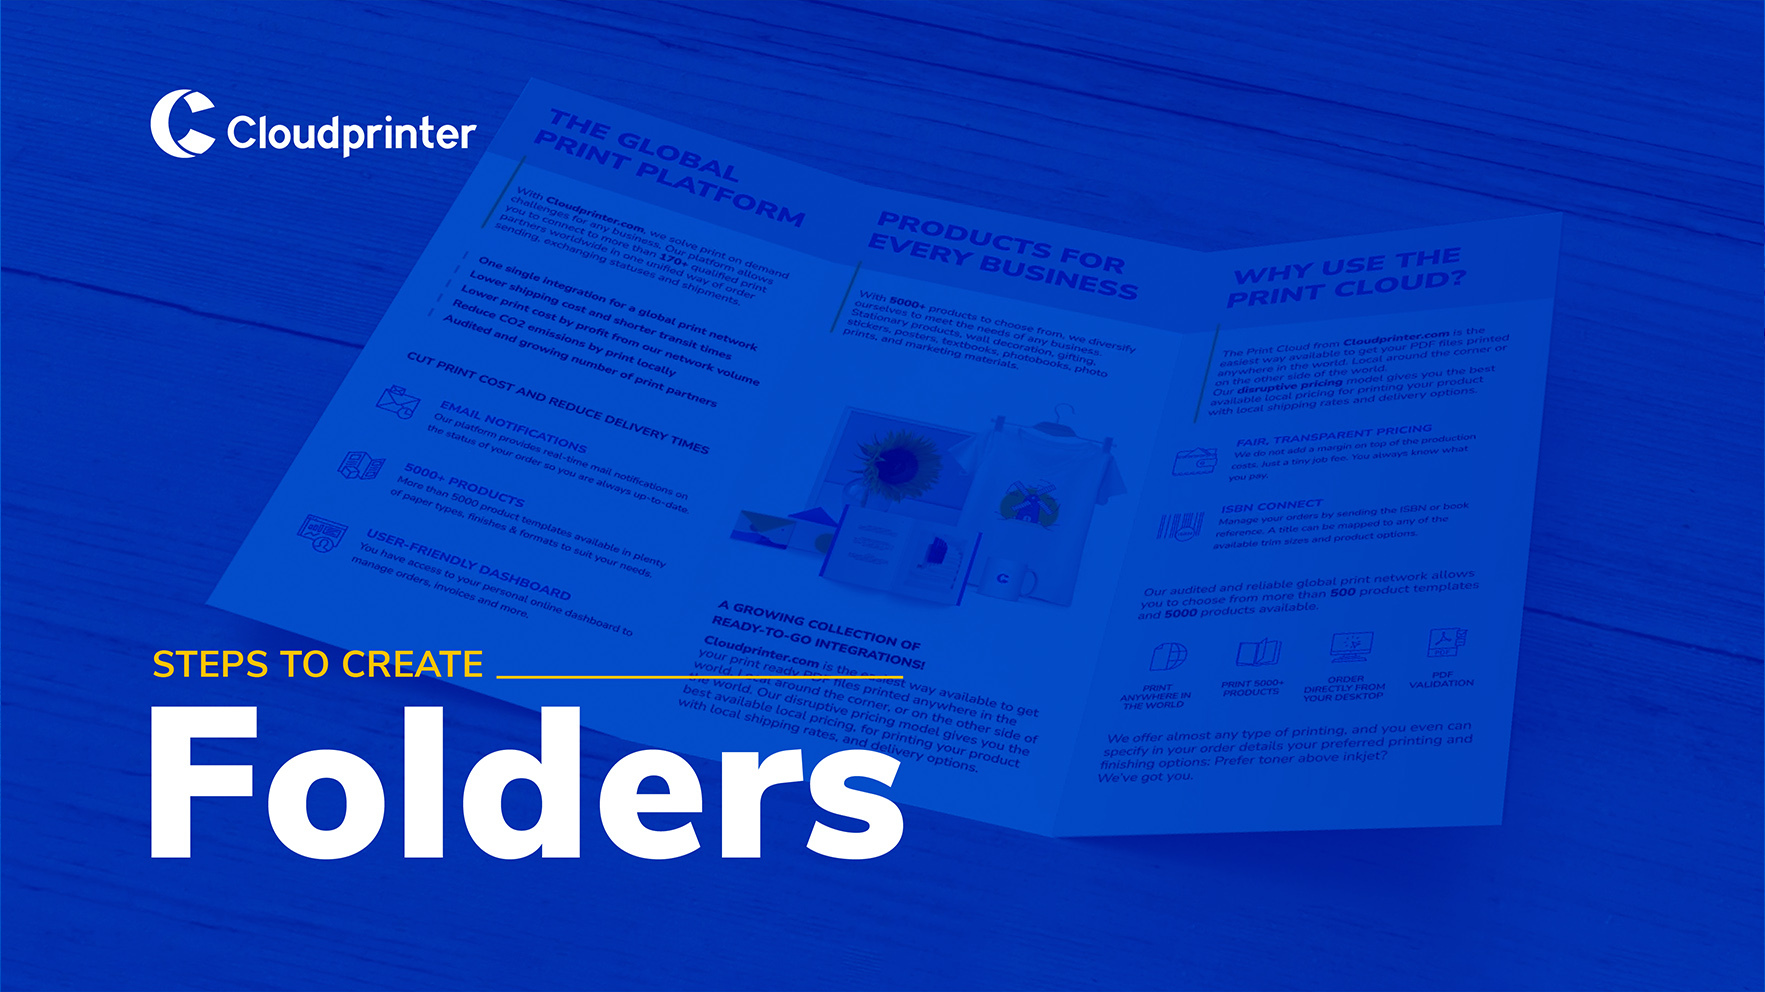 Print folders on demand with Cloudprinter.com